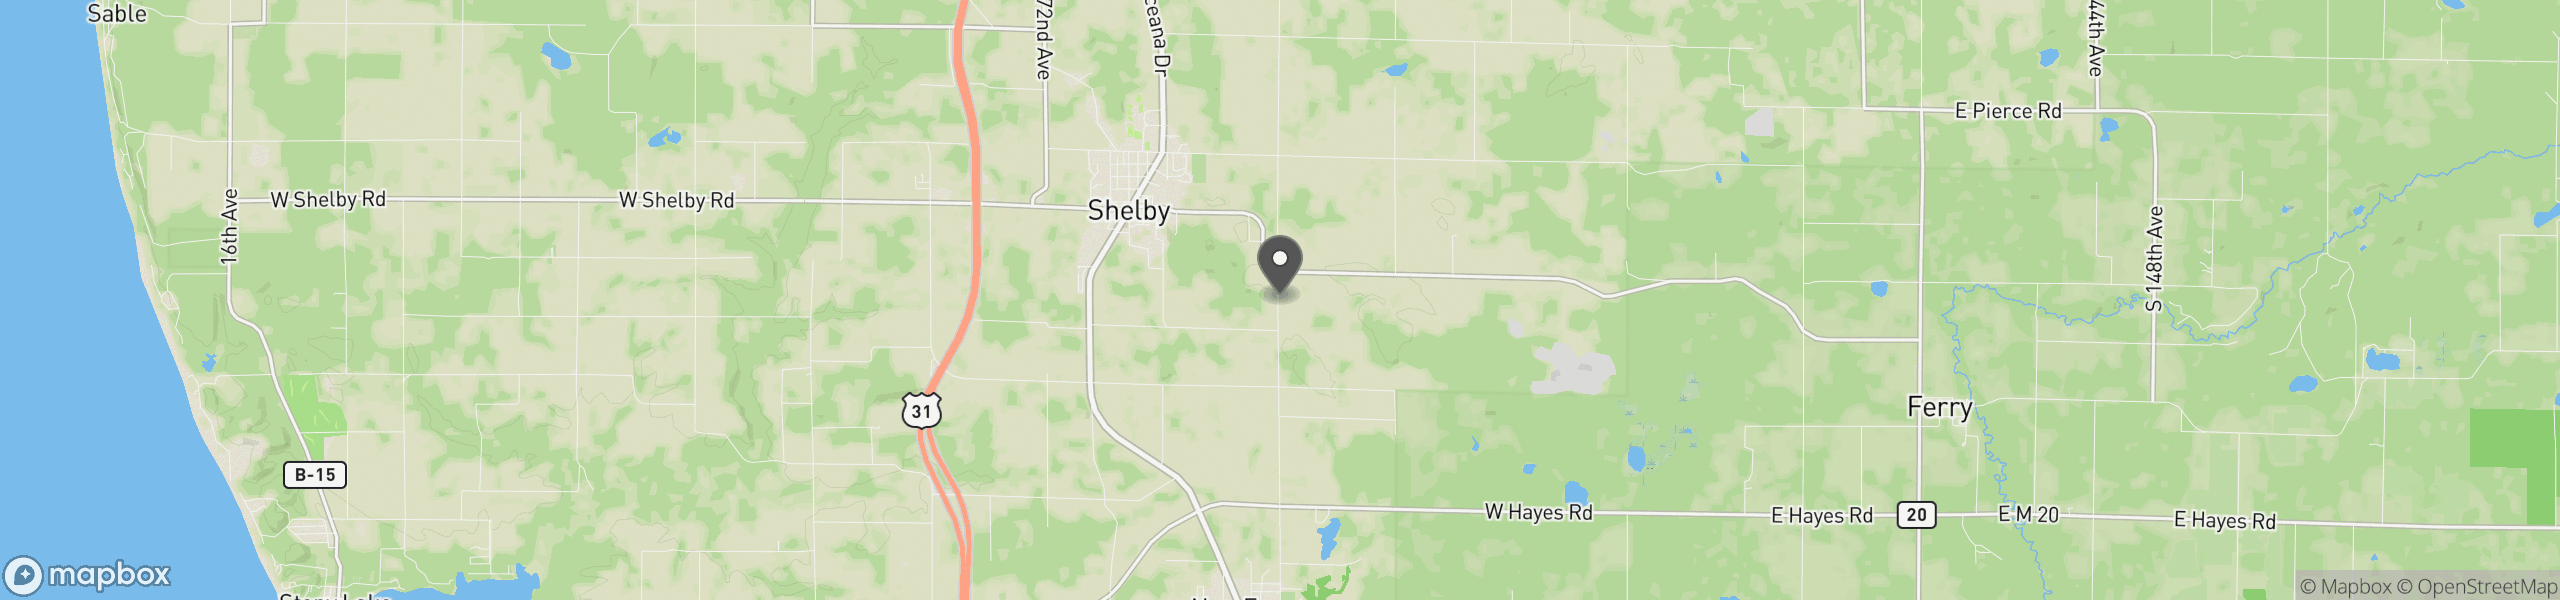 Shelby Township, MI